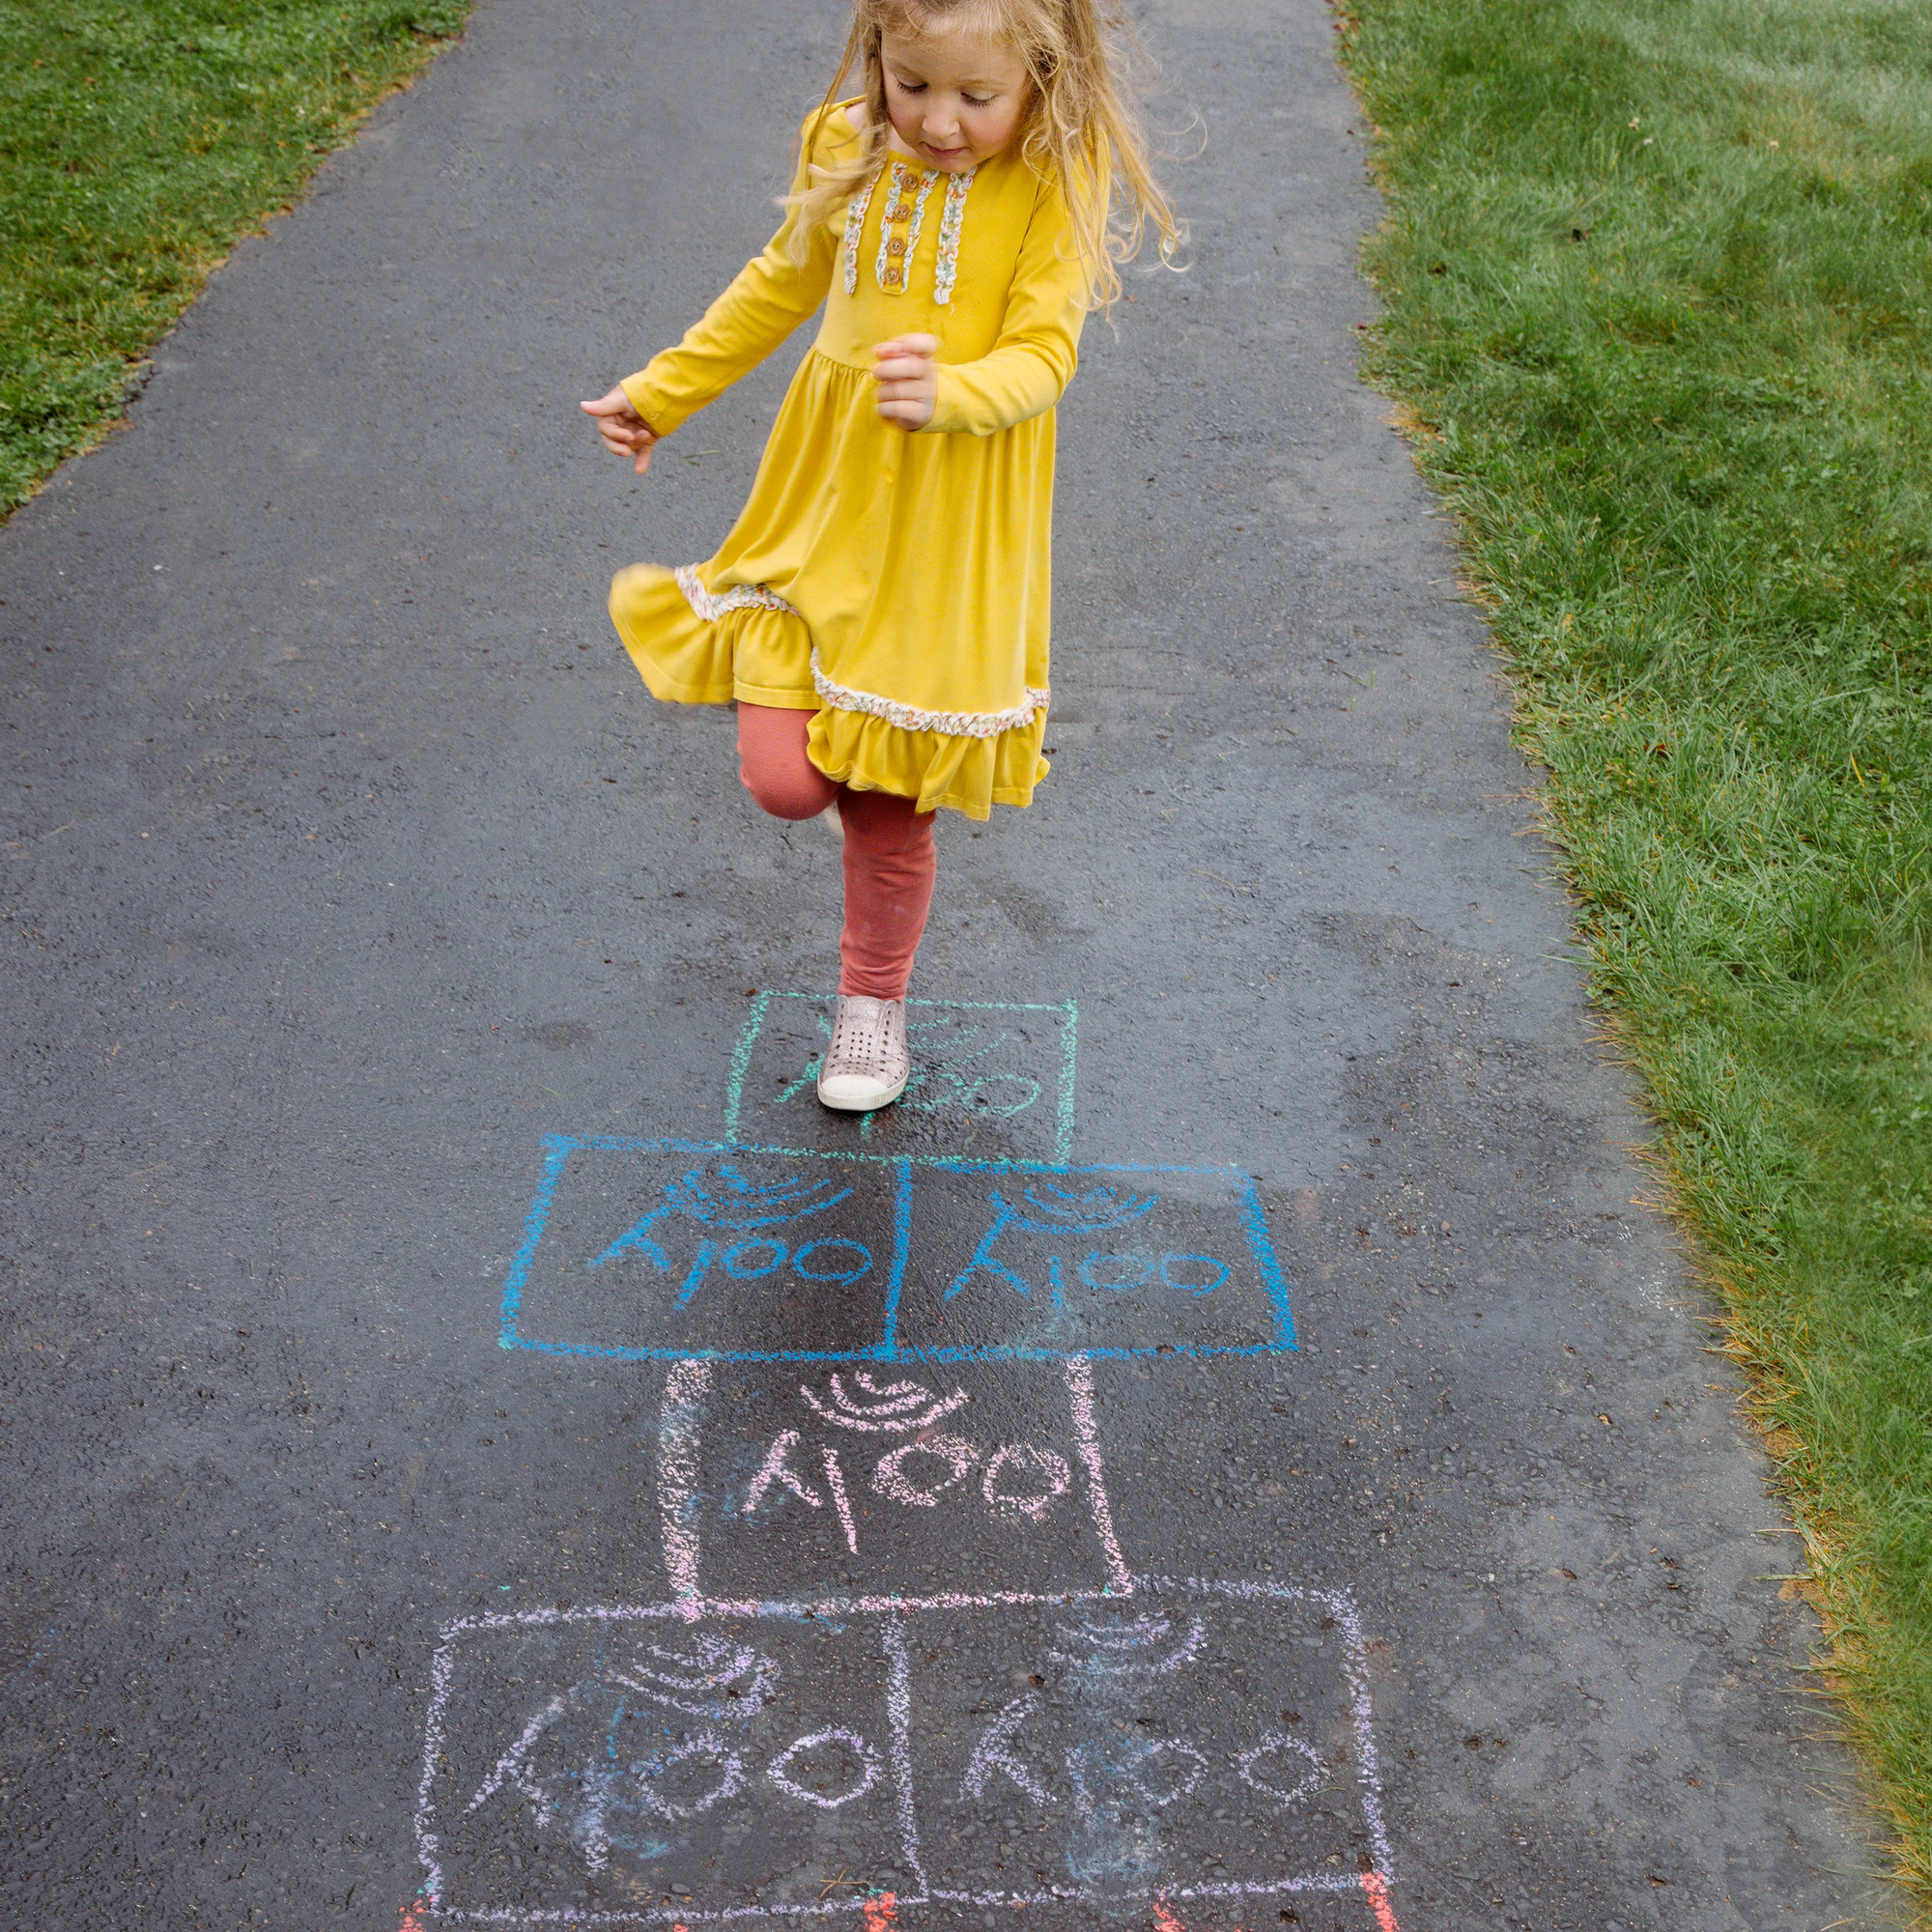 Girl skipping on hopscotch pattern mad with OOLY Chalk-O-Rama Block Sidewalk Chalk